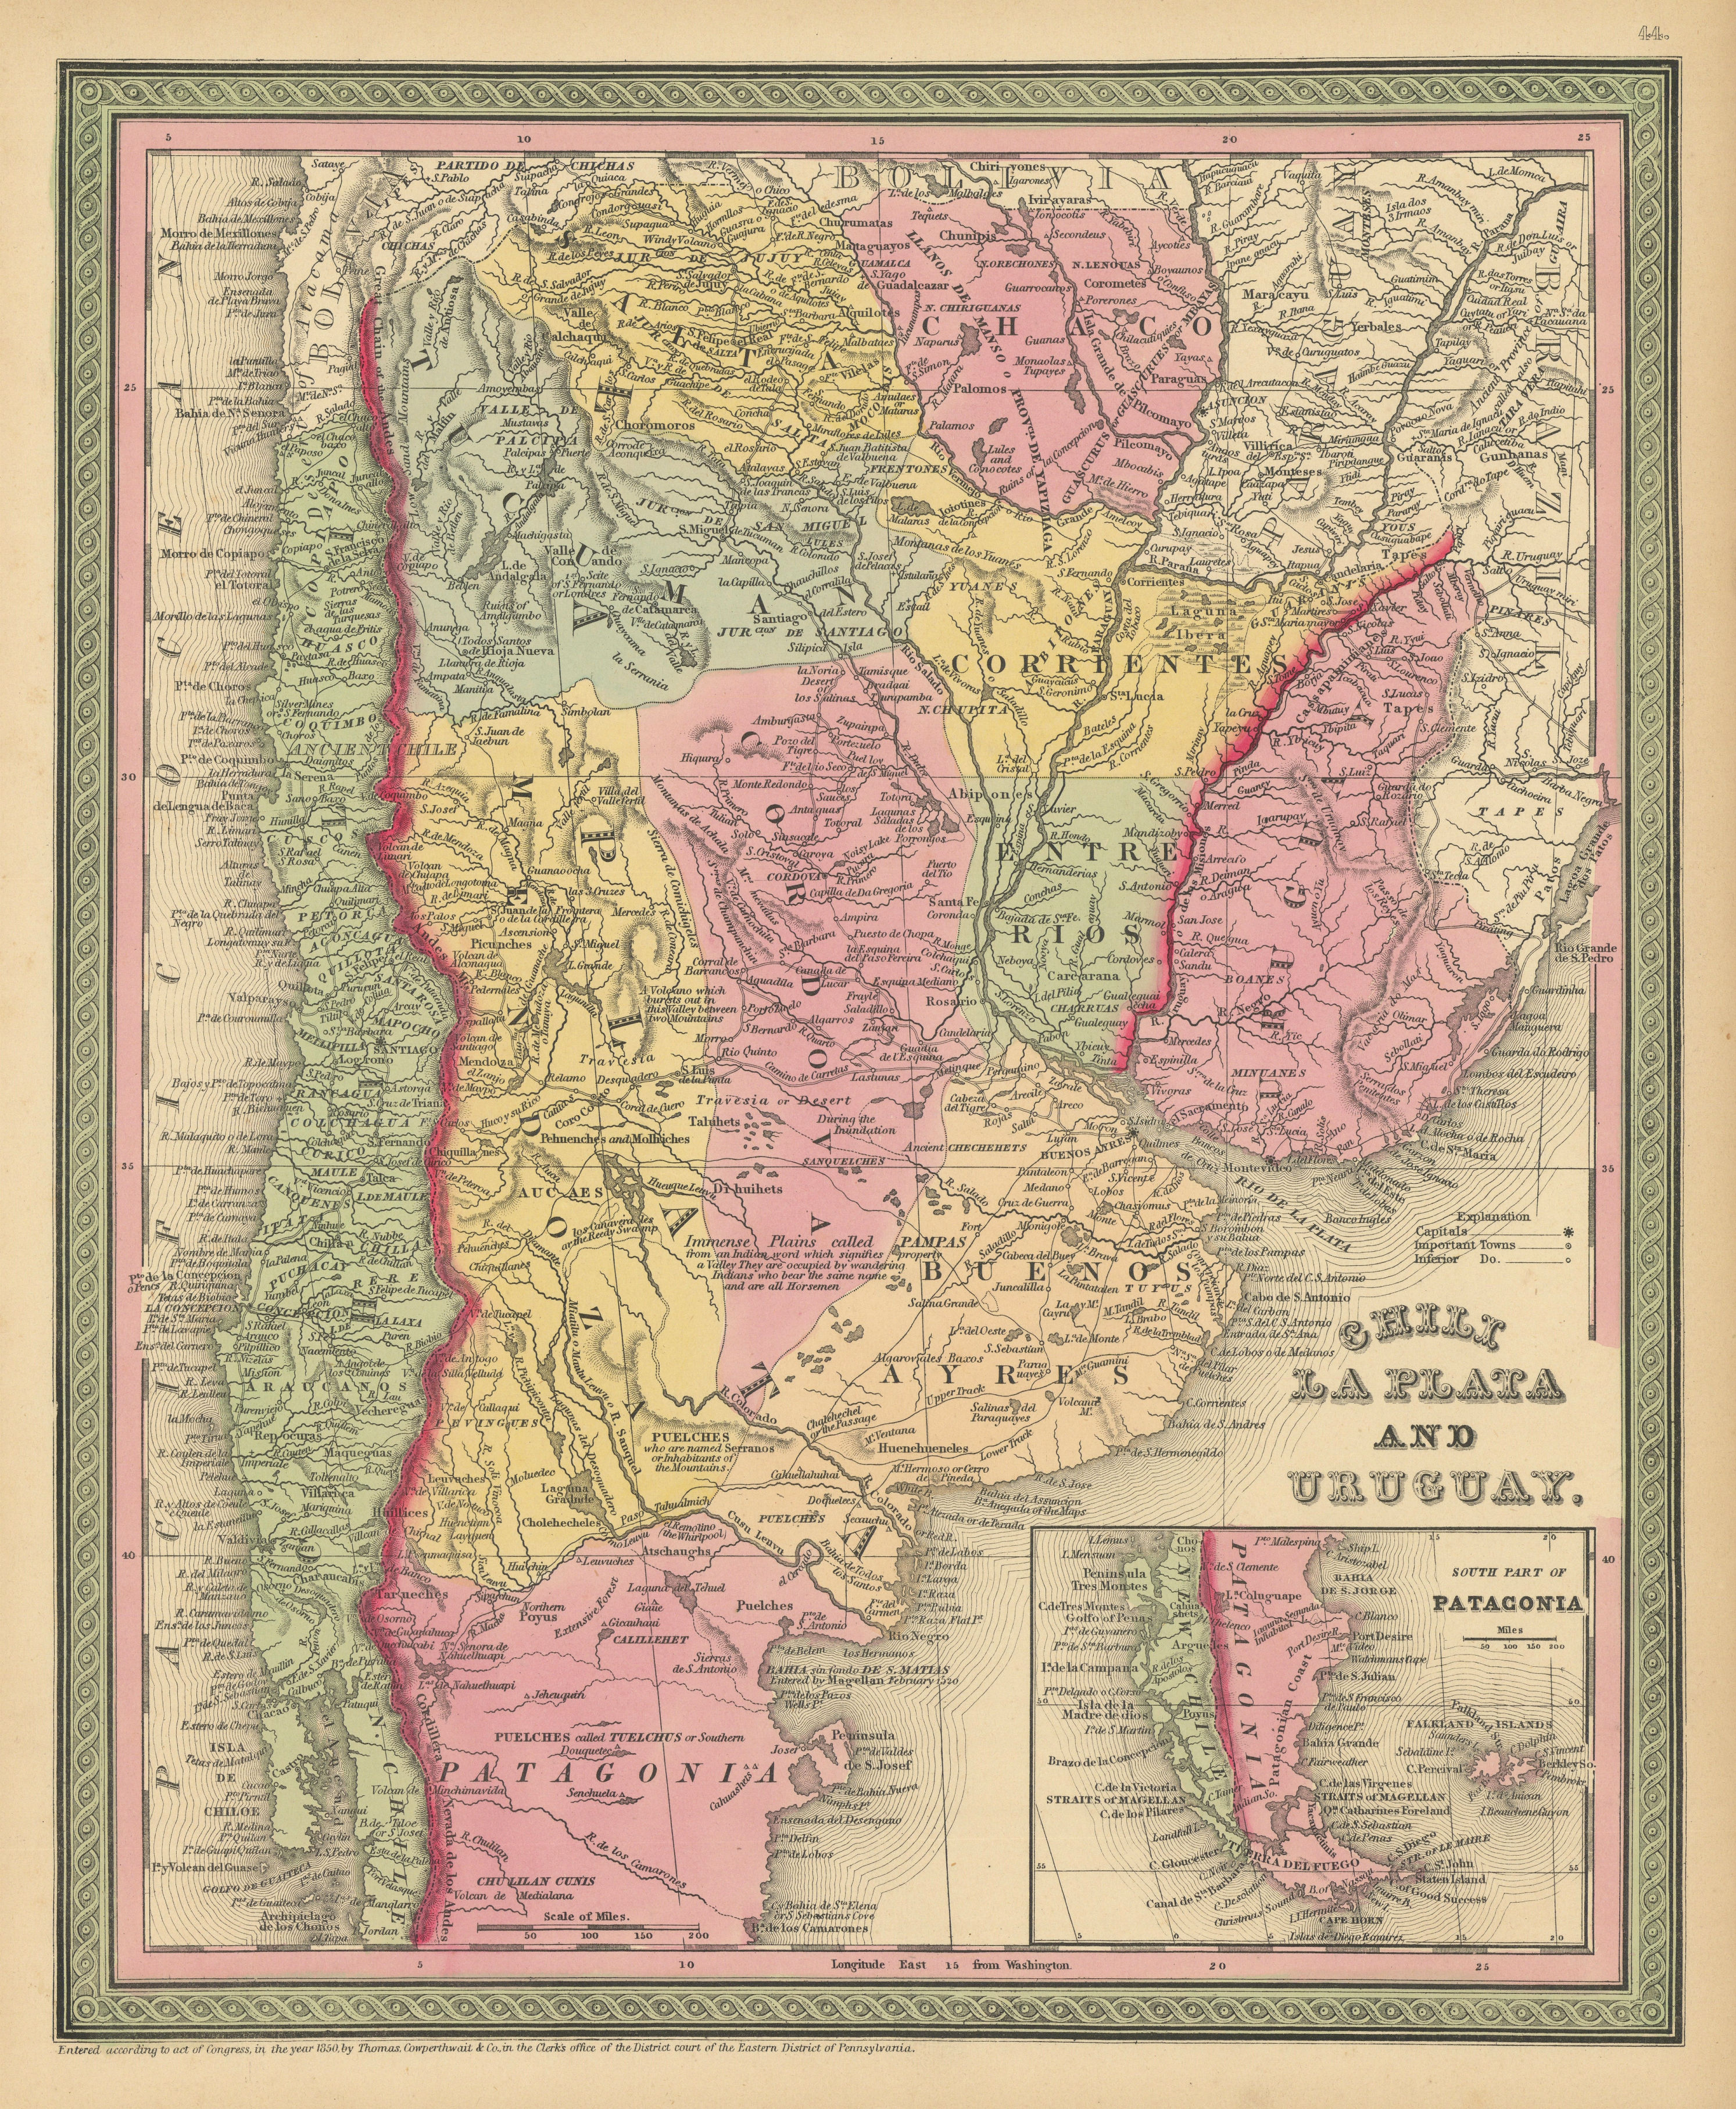 Associate Product Chili, La Plata and Uruguay. Argentina Chile. THOMAS, COWPERTHWAIT 1852 map